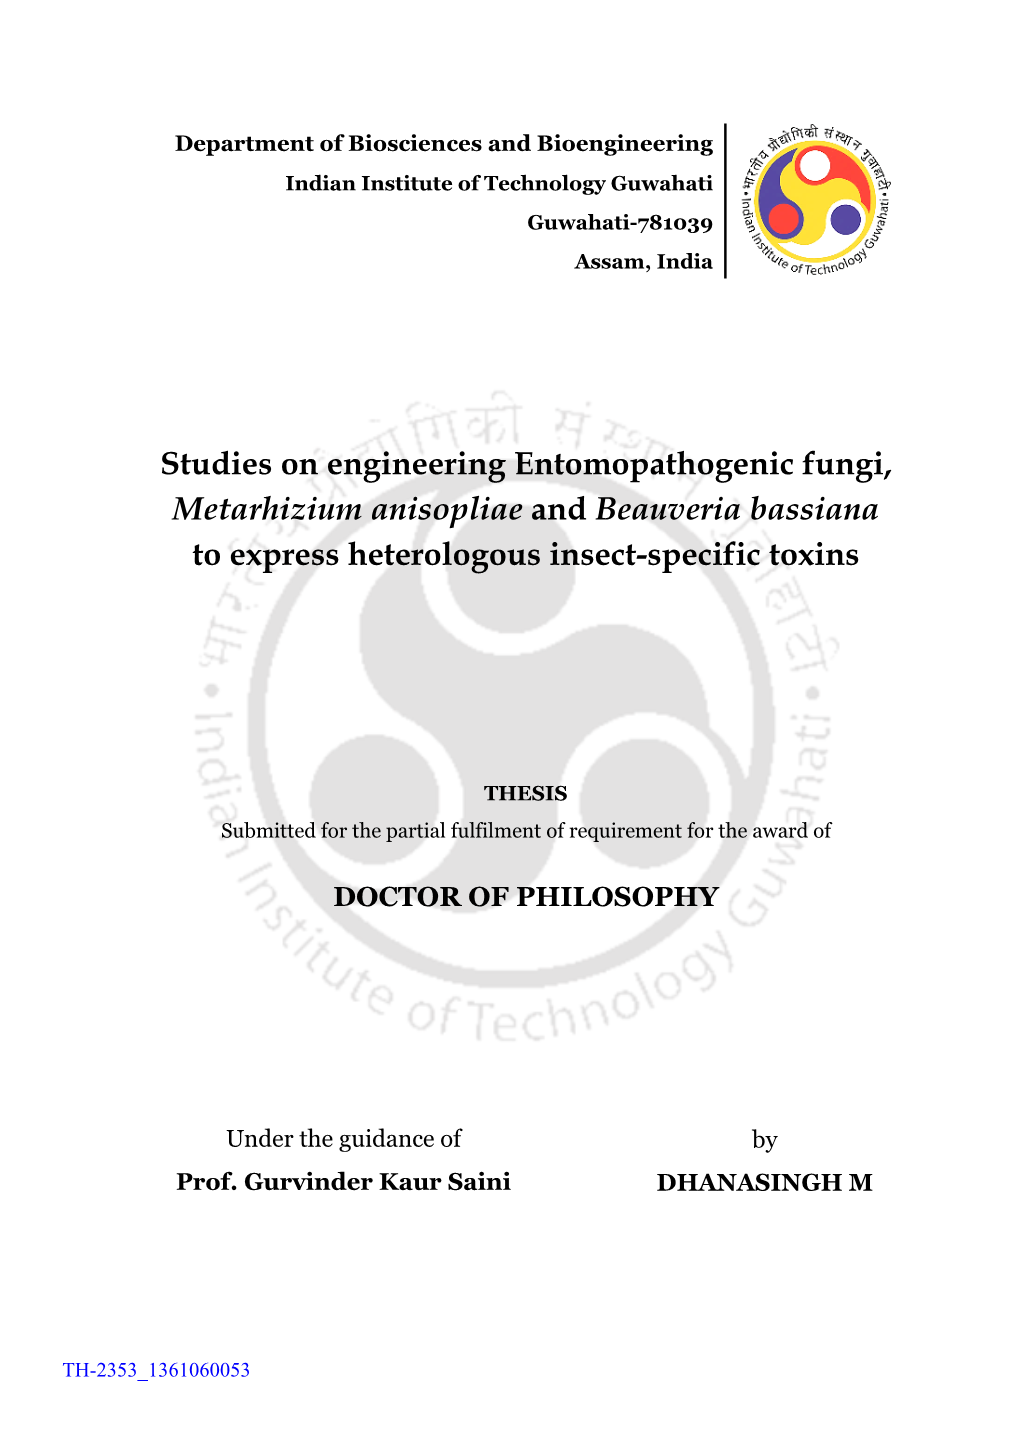 Studies on Engineering Entomopathogenic Fungi, Metarhizium Anisopliae and Beauveria Bassiana to Express Heterologous Insect-Specific Toxins